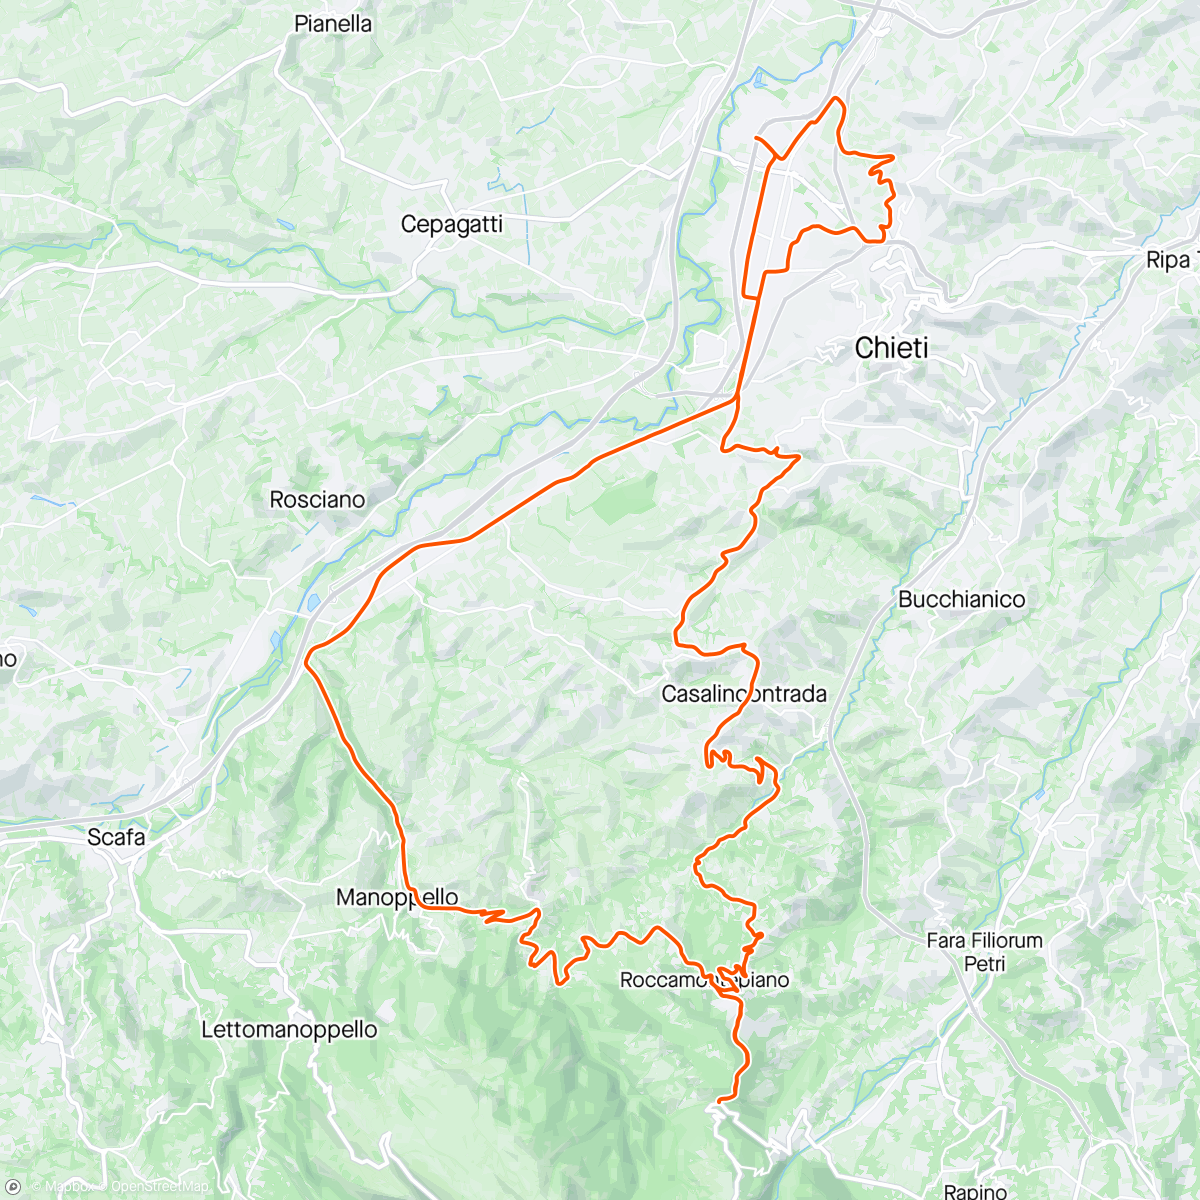 Map of the activity, Casalincontrada, Roccamontepiano, Lupo, Serramonacesca, Manoppello.